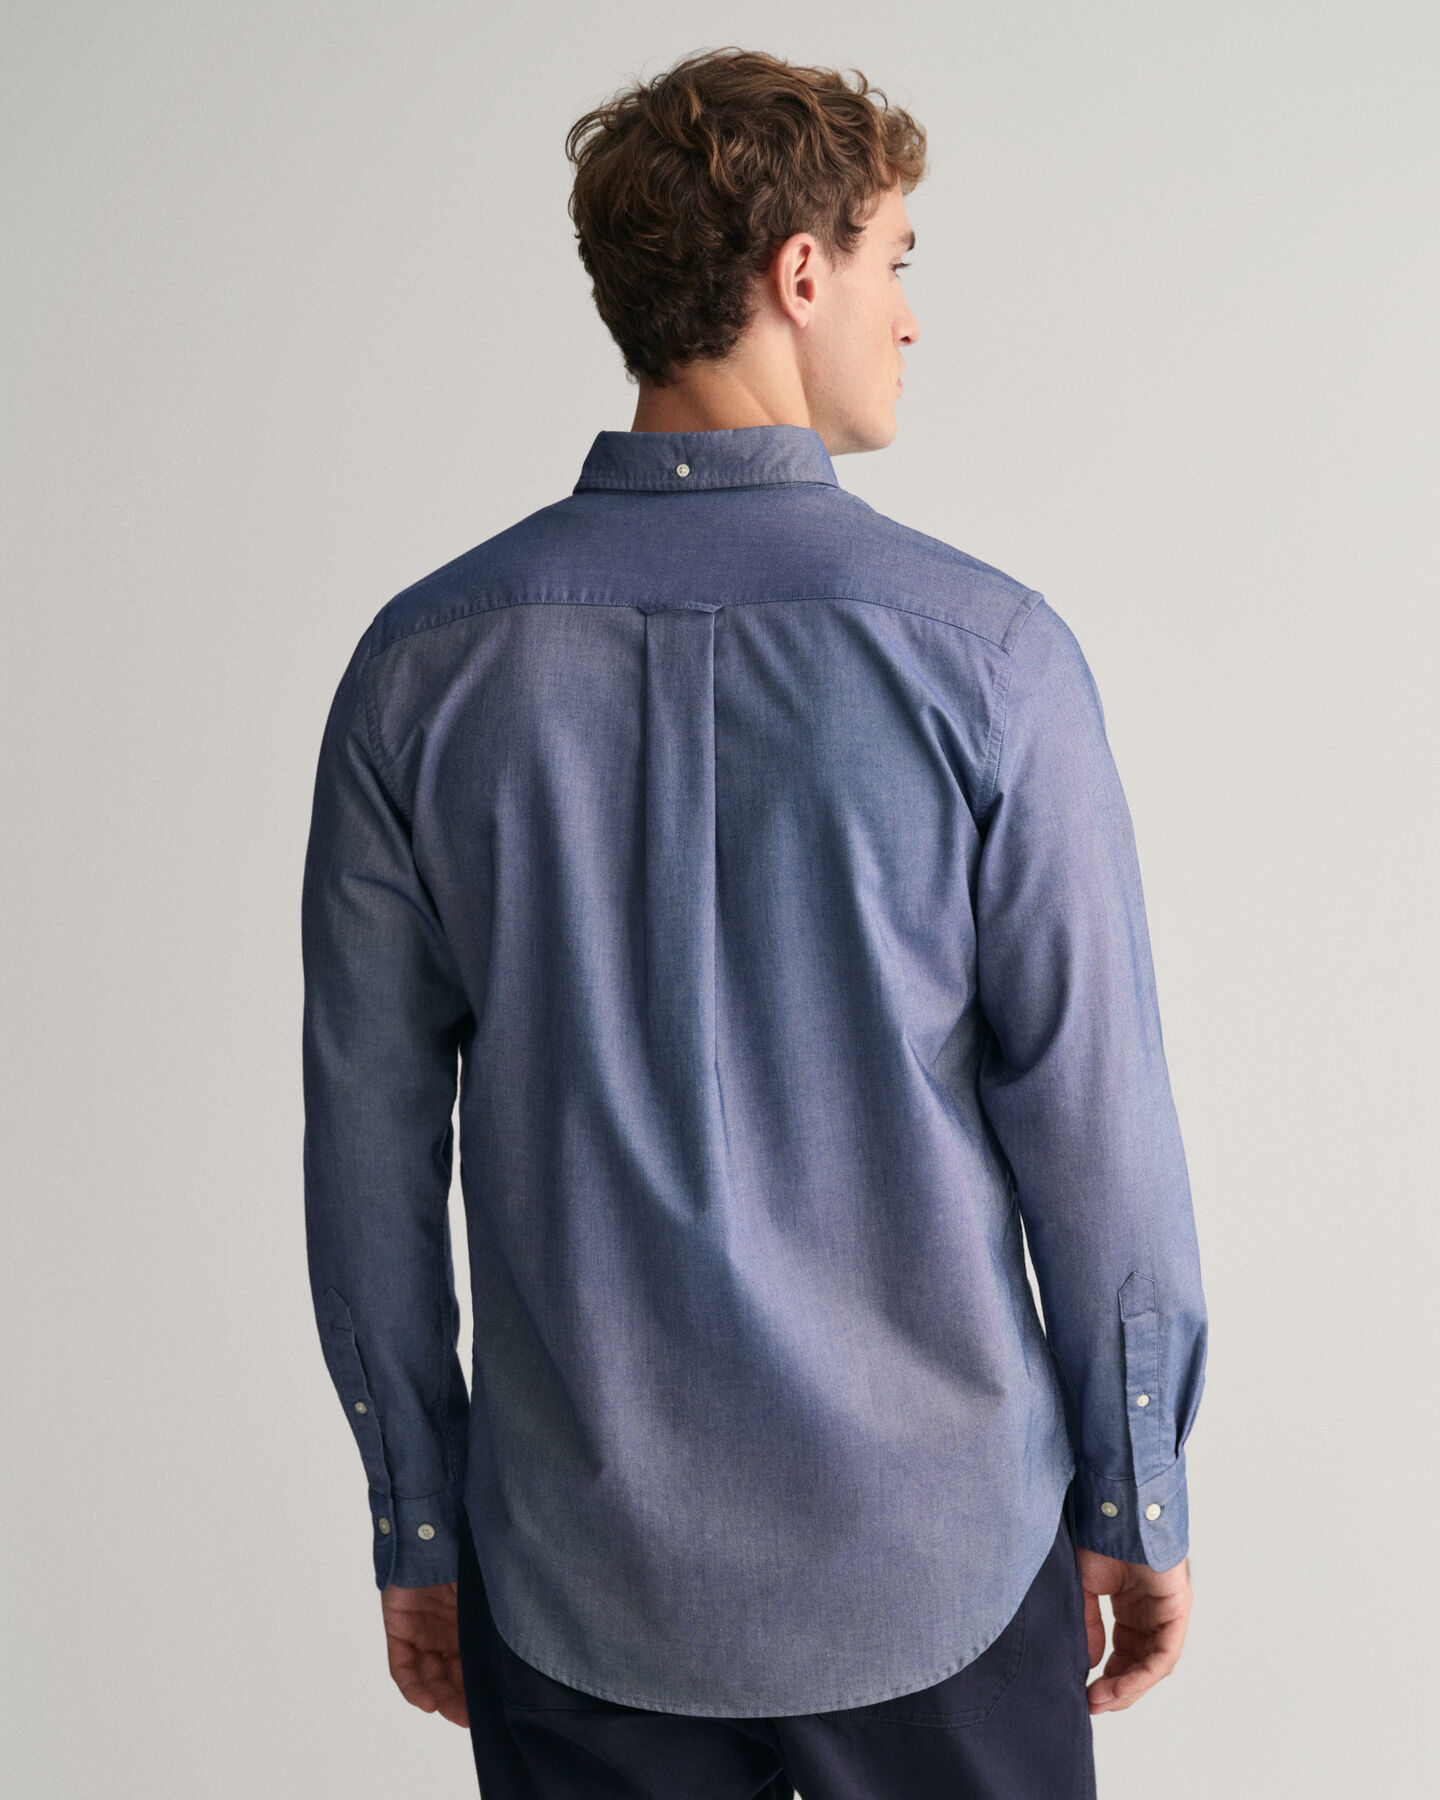 Regular GANT Oxford - Fit Shirt